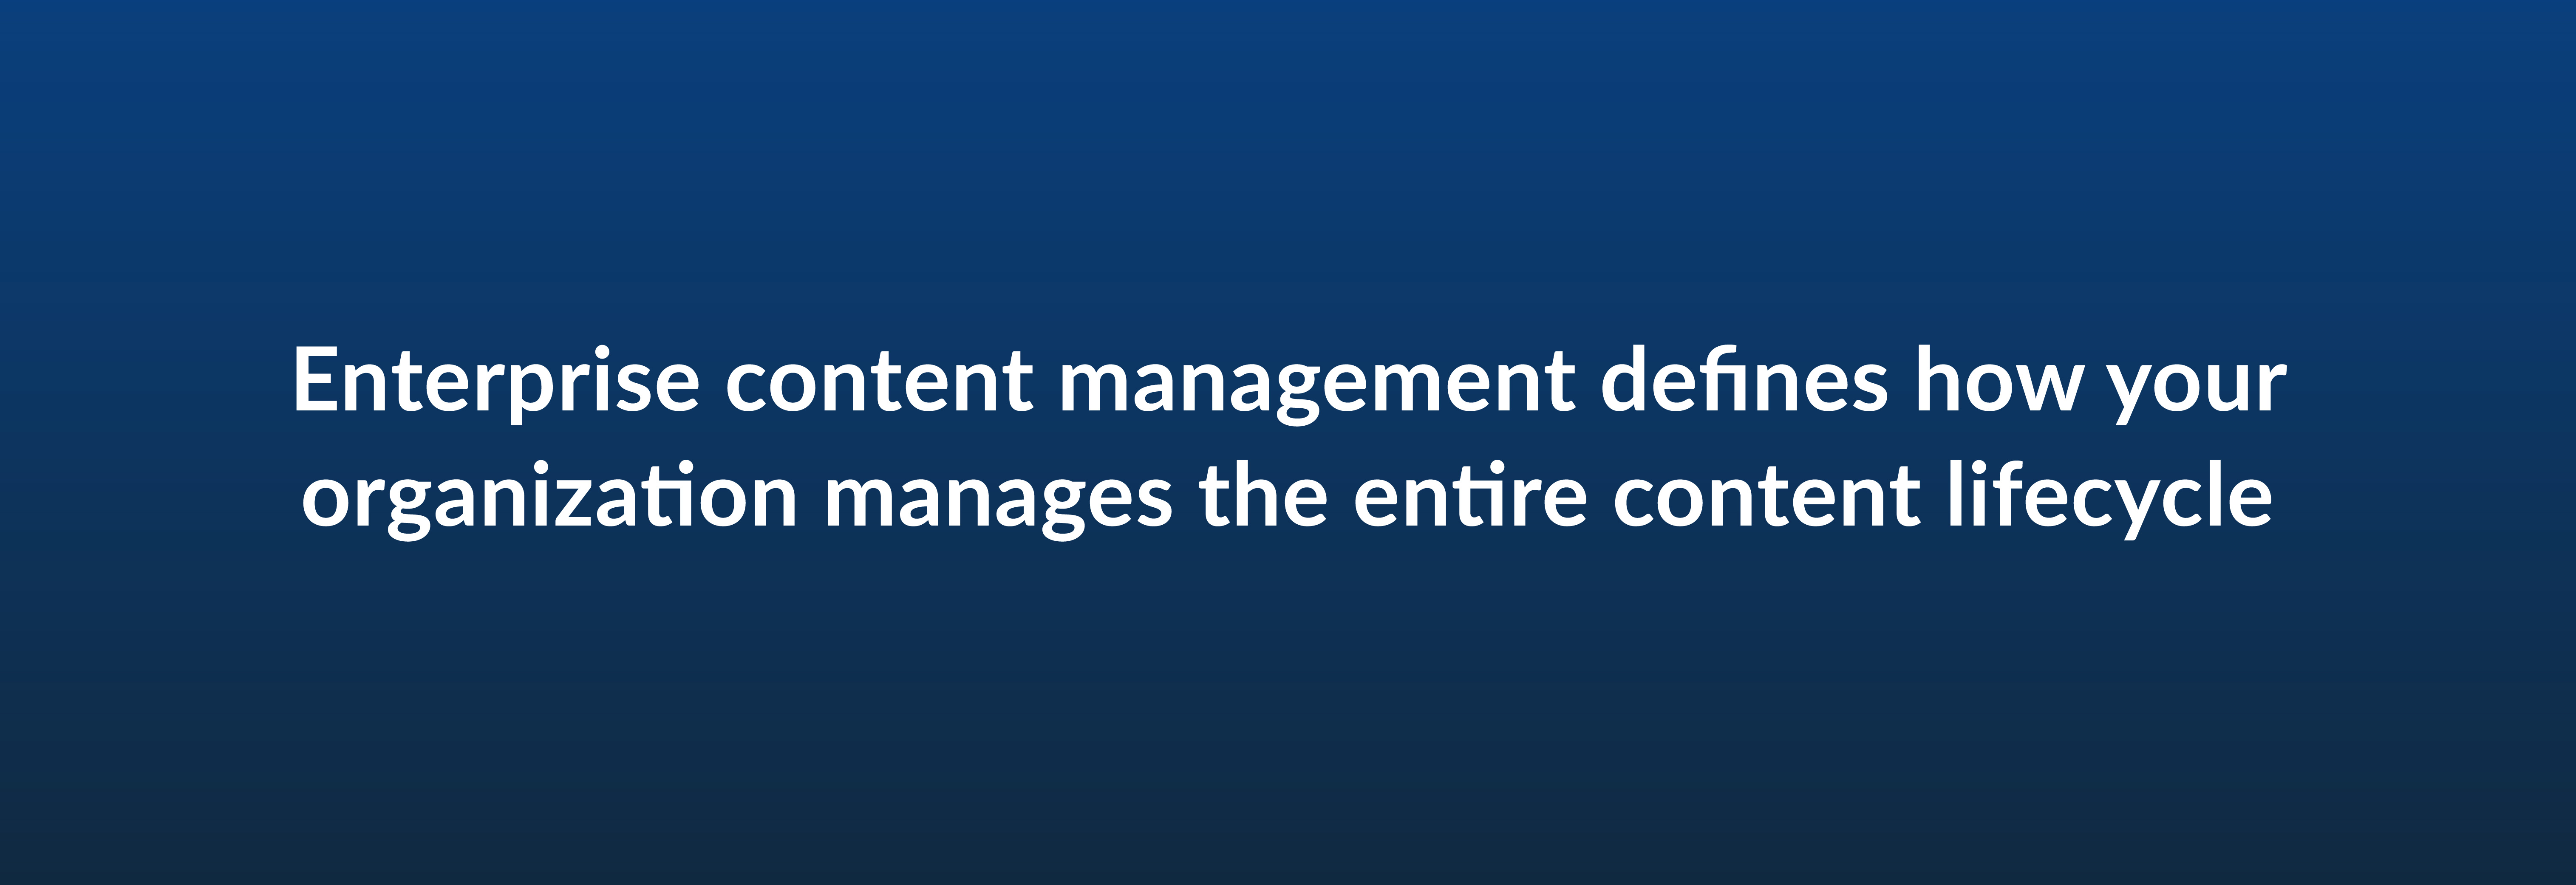 Enterprise content management defines how your organization manages the entire content lifecycle